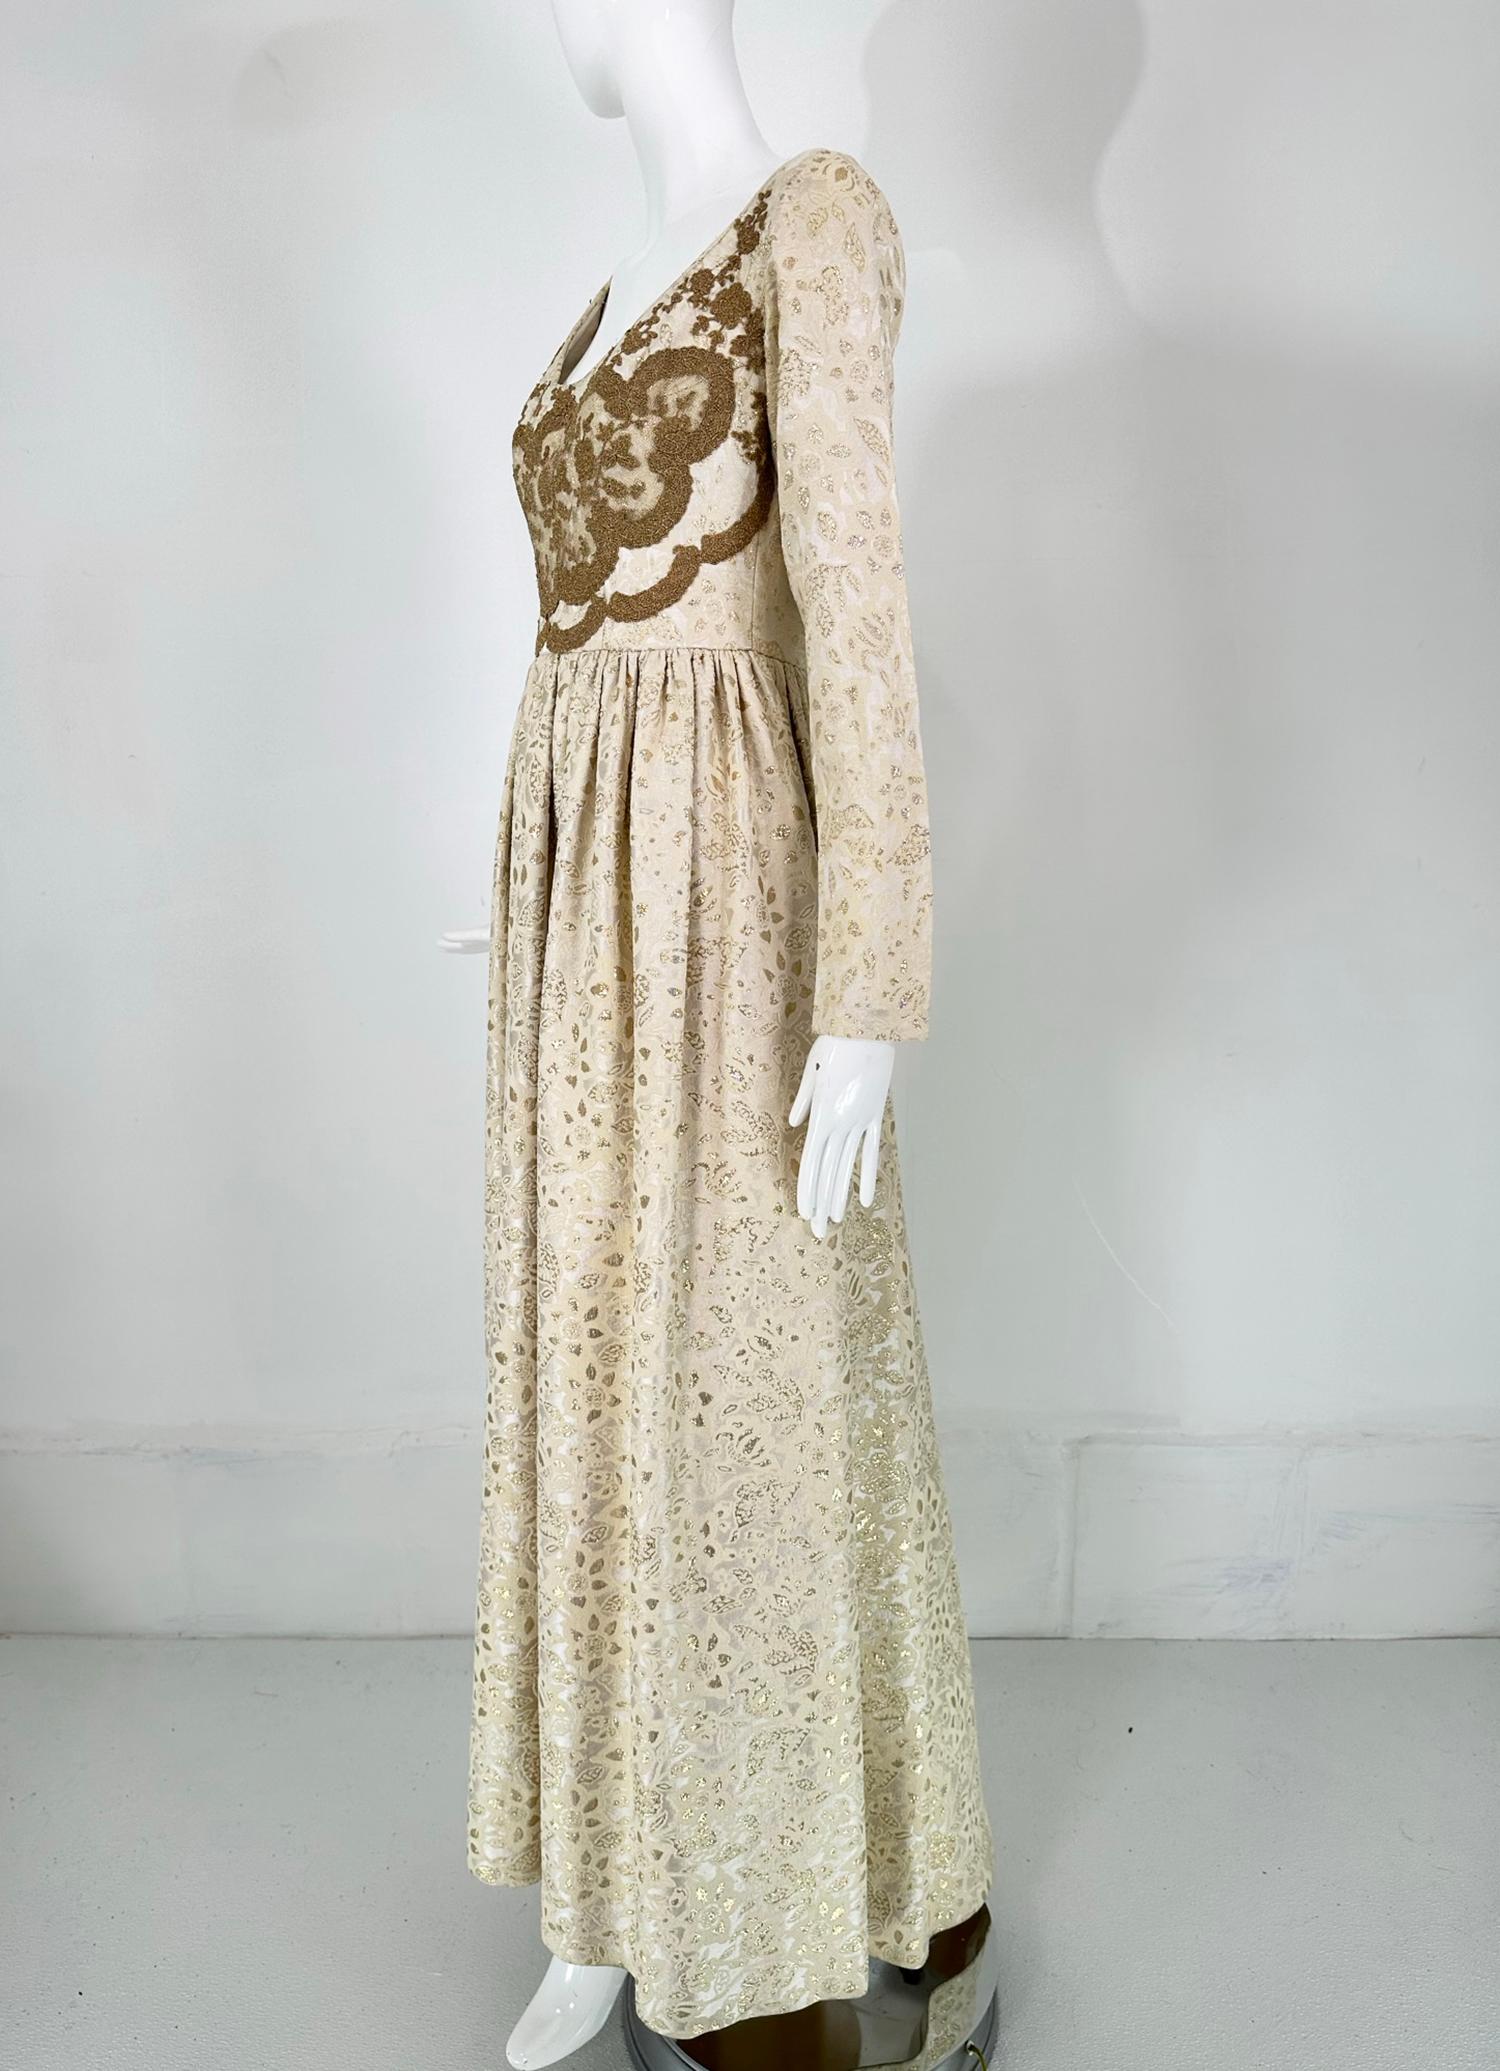 Galitizne Couture Renaissance Style Gown in Cream & Gold Metallic Brocade 1970s For Sale 7